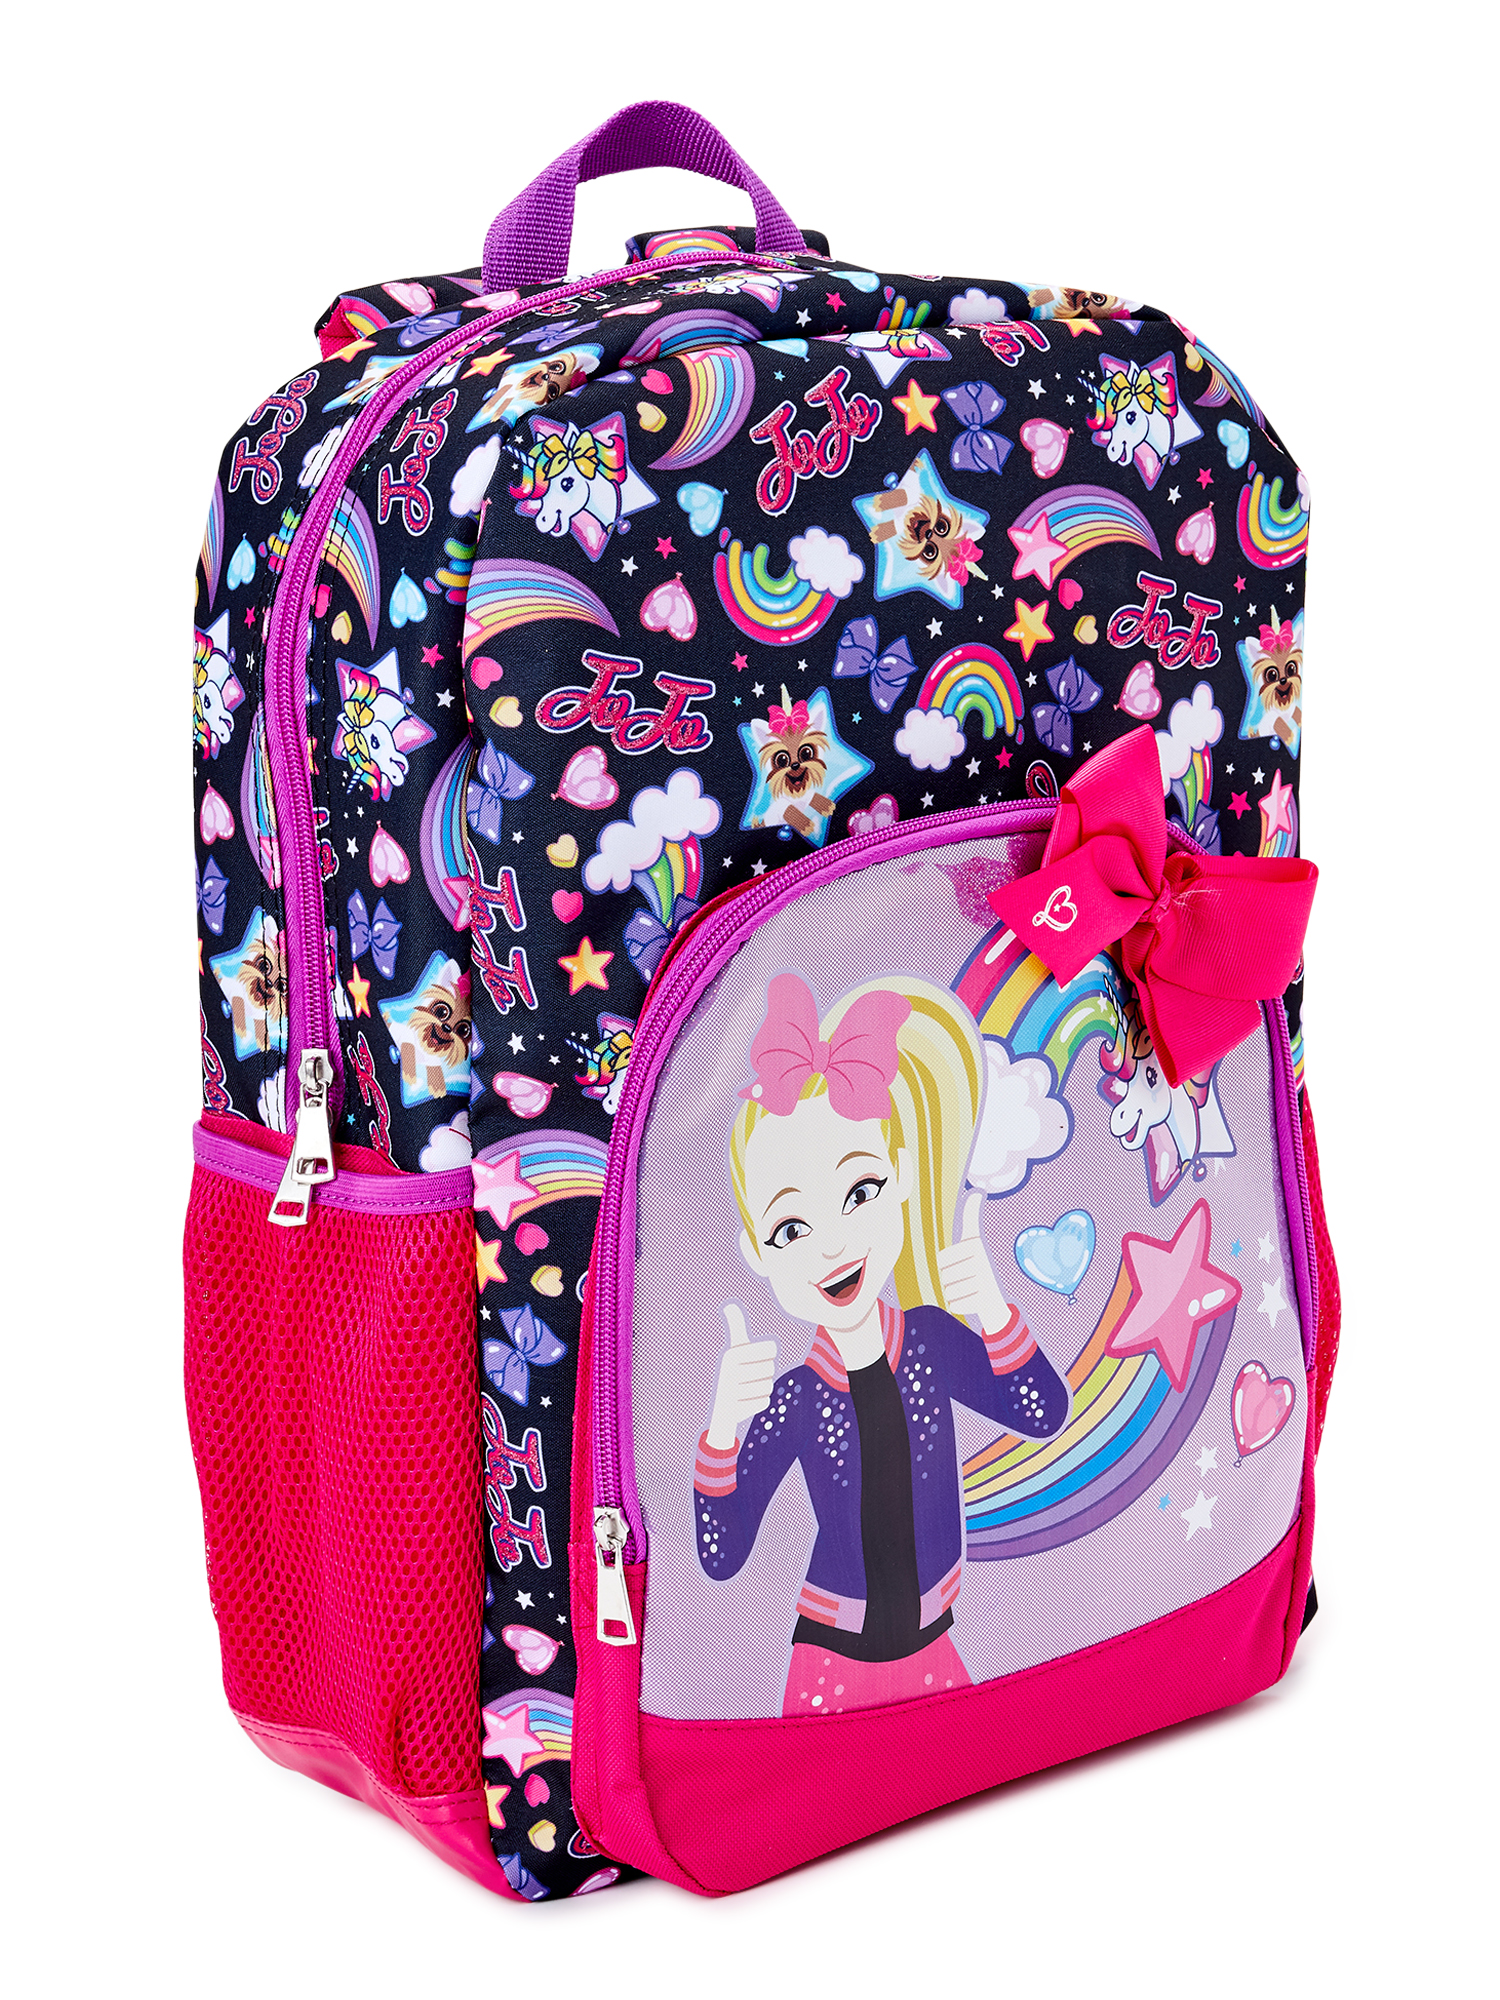 Nickelodeon Jojo Siwa Follow Your Dream Girls' Backpack - image 3 of 5